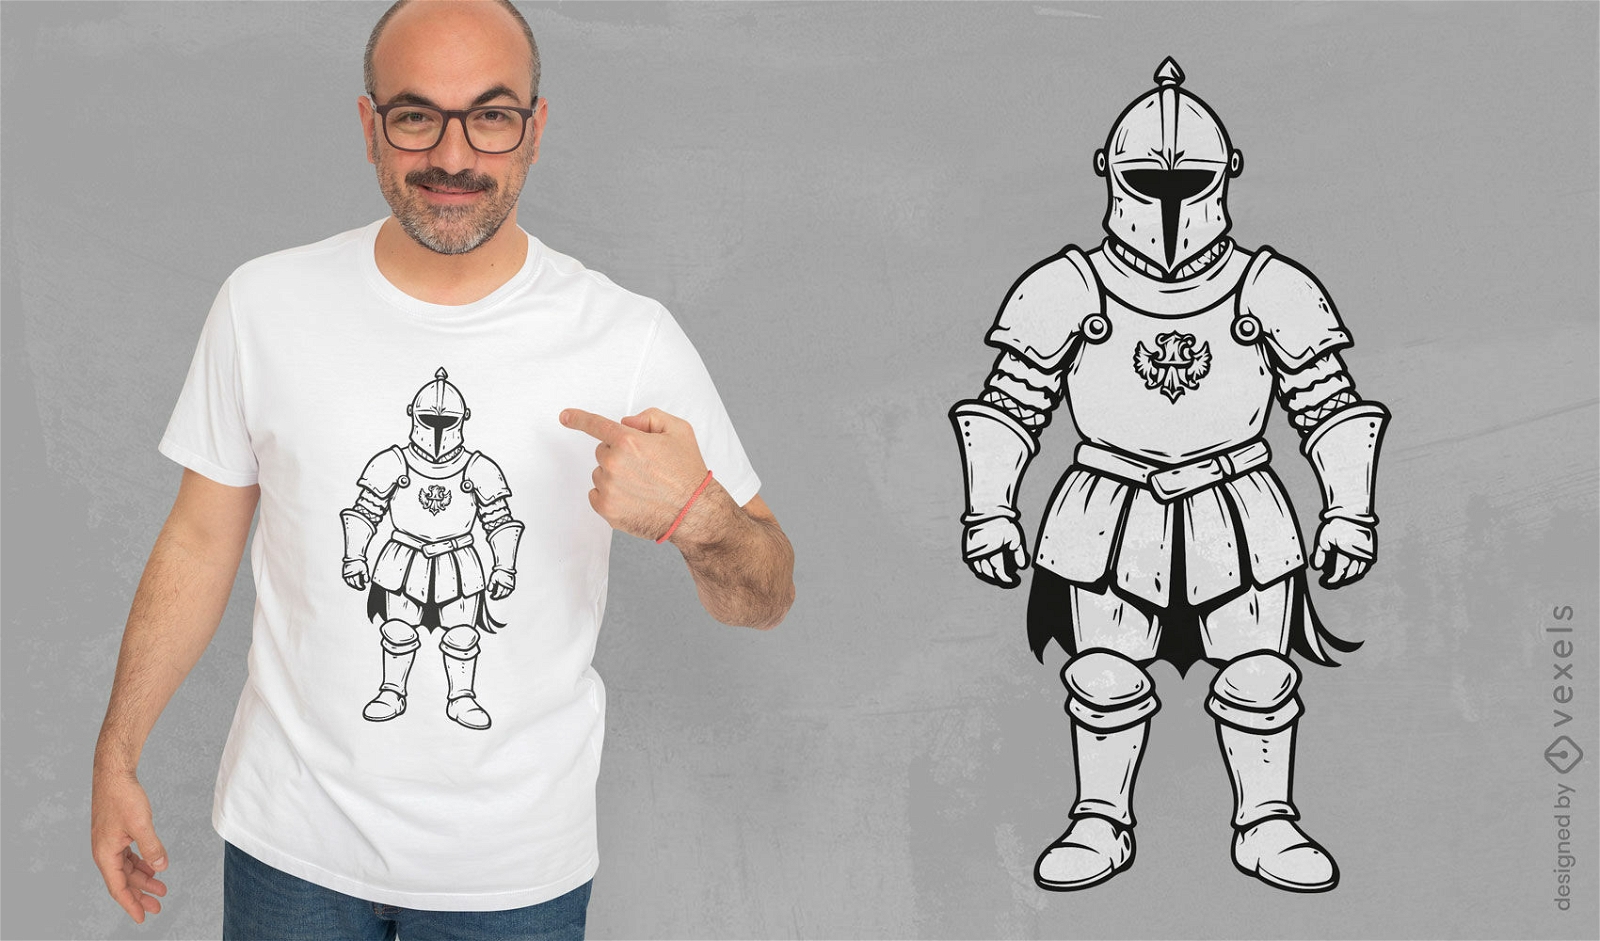 Classic medieval knight armor t-shirt design